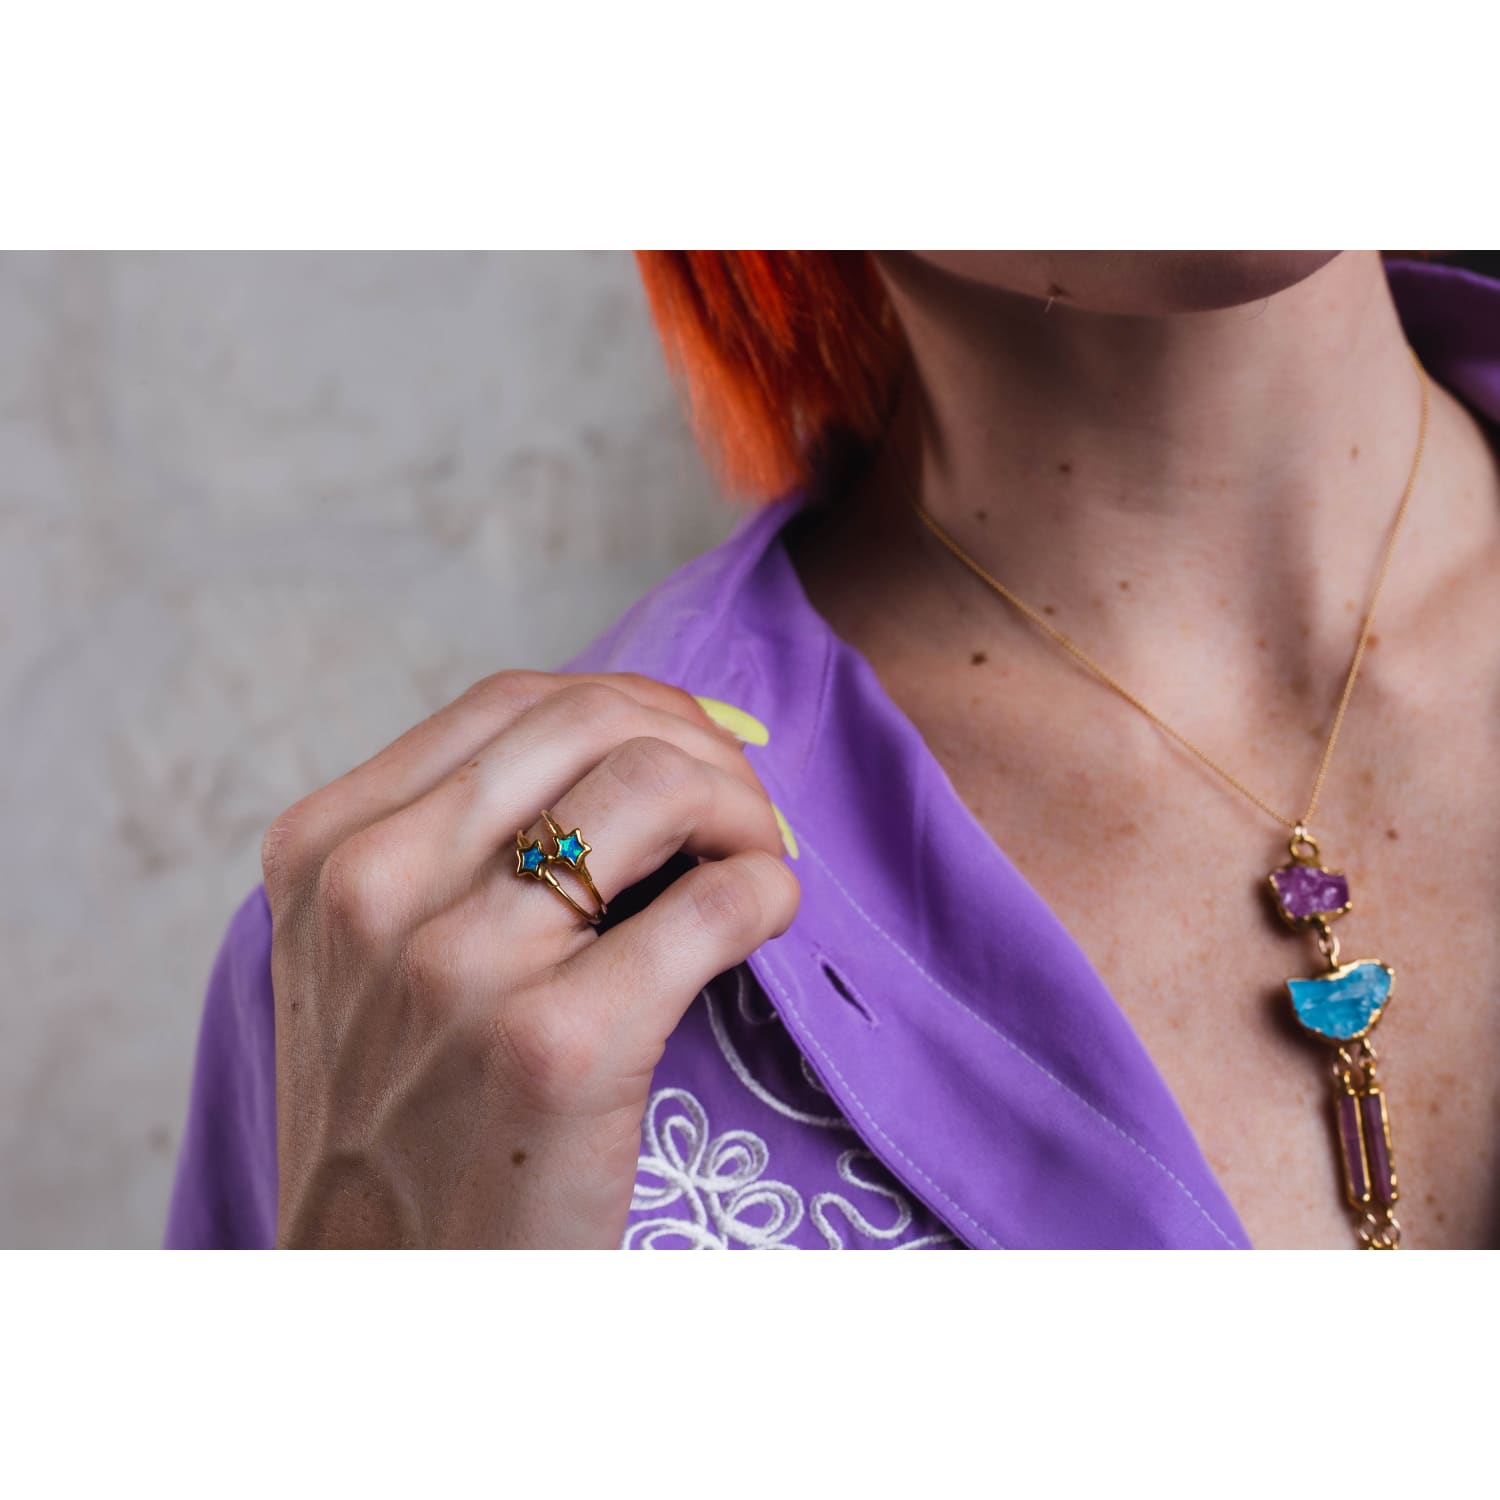 Dainty Star Kyocera Opal Ring Raw Gemstone Jewelry Rough